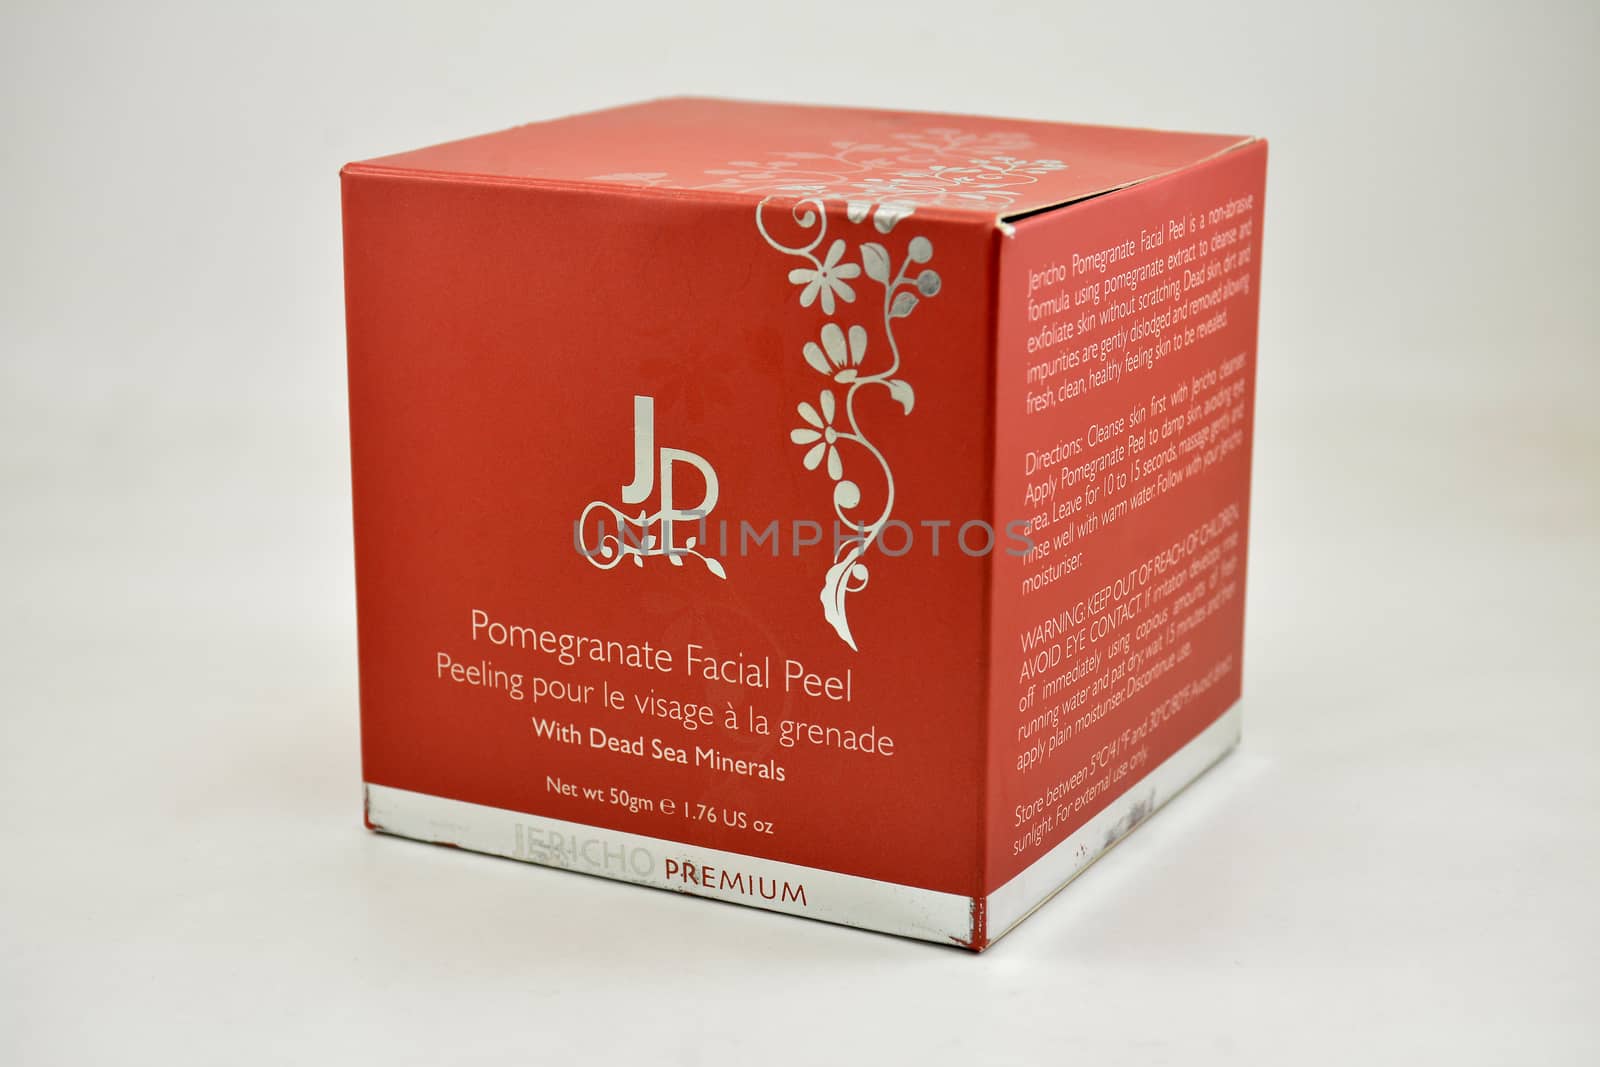 Jericho pomegranate facial peel with dead sea minerals box in Ma by imwaltersy